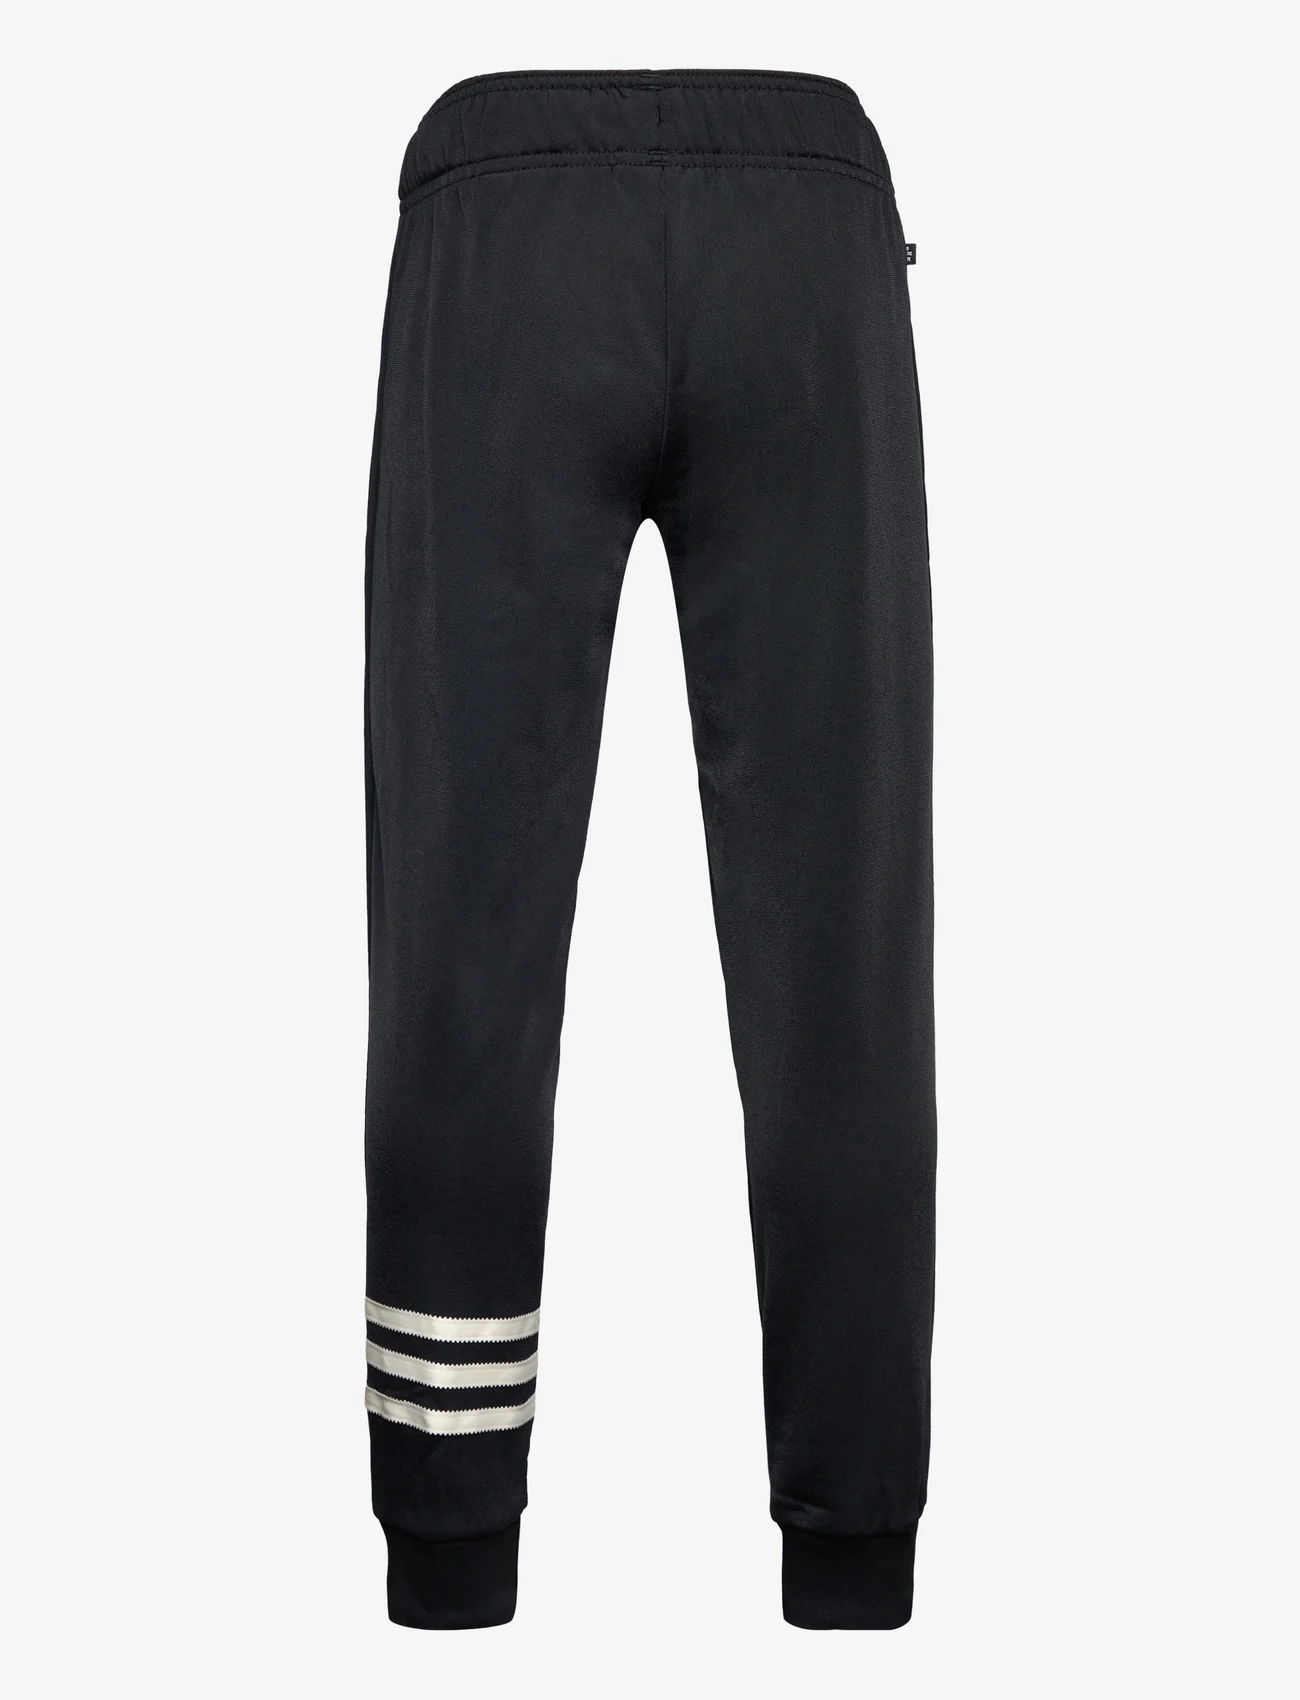 adidas Originals Track Pants (Black), (28.69 €) | Large selection of ...